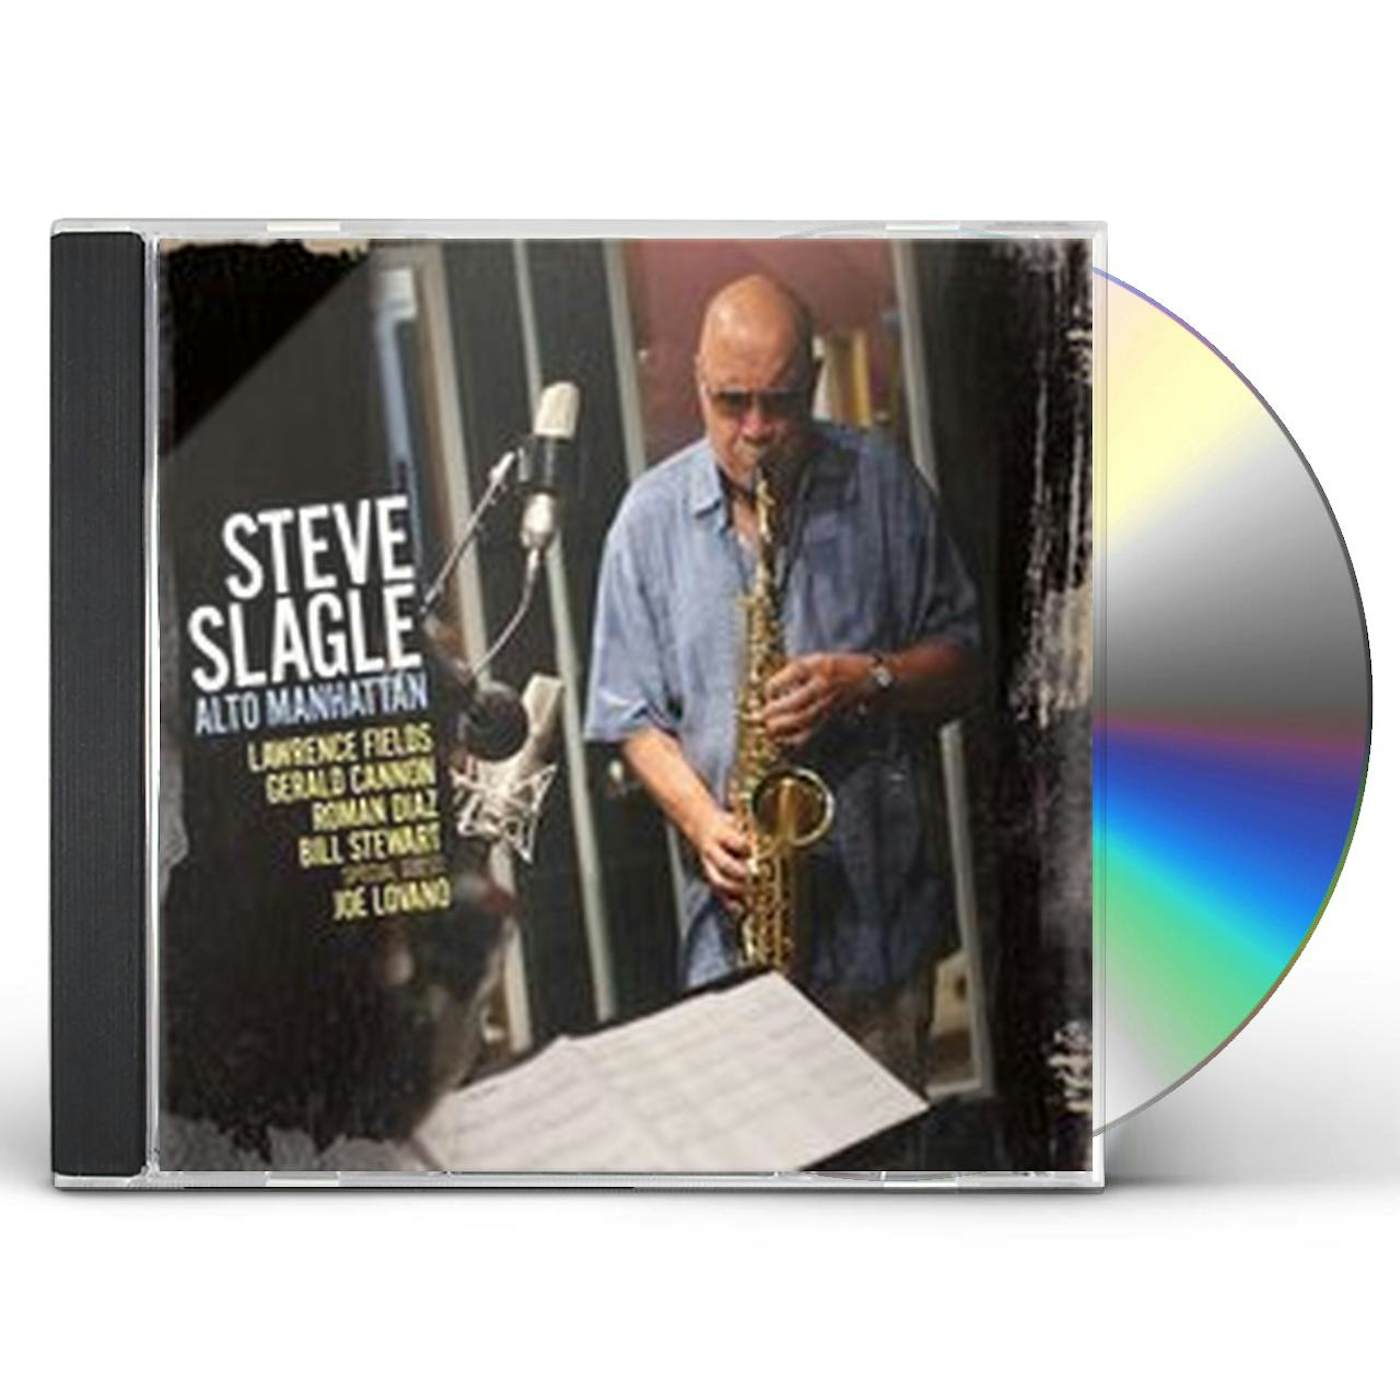 Steve Slagle ALTO MANHATTAN CD